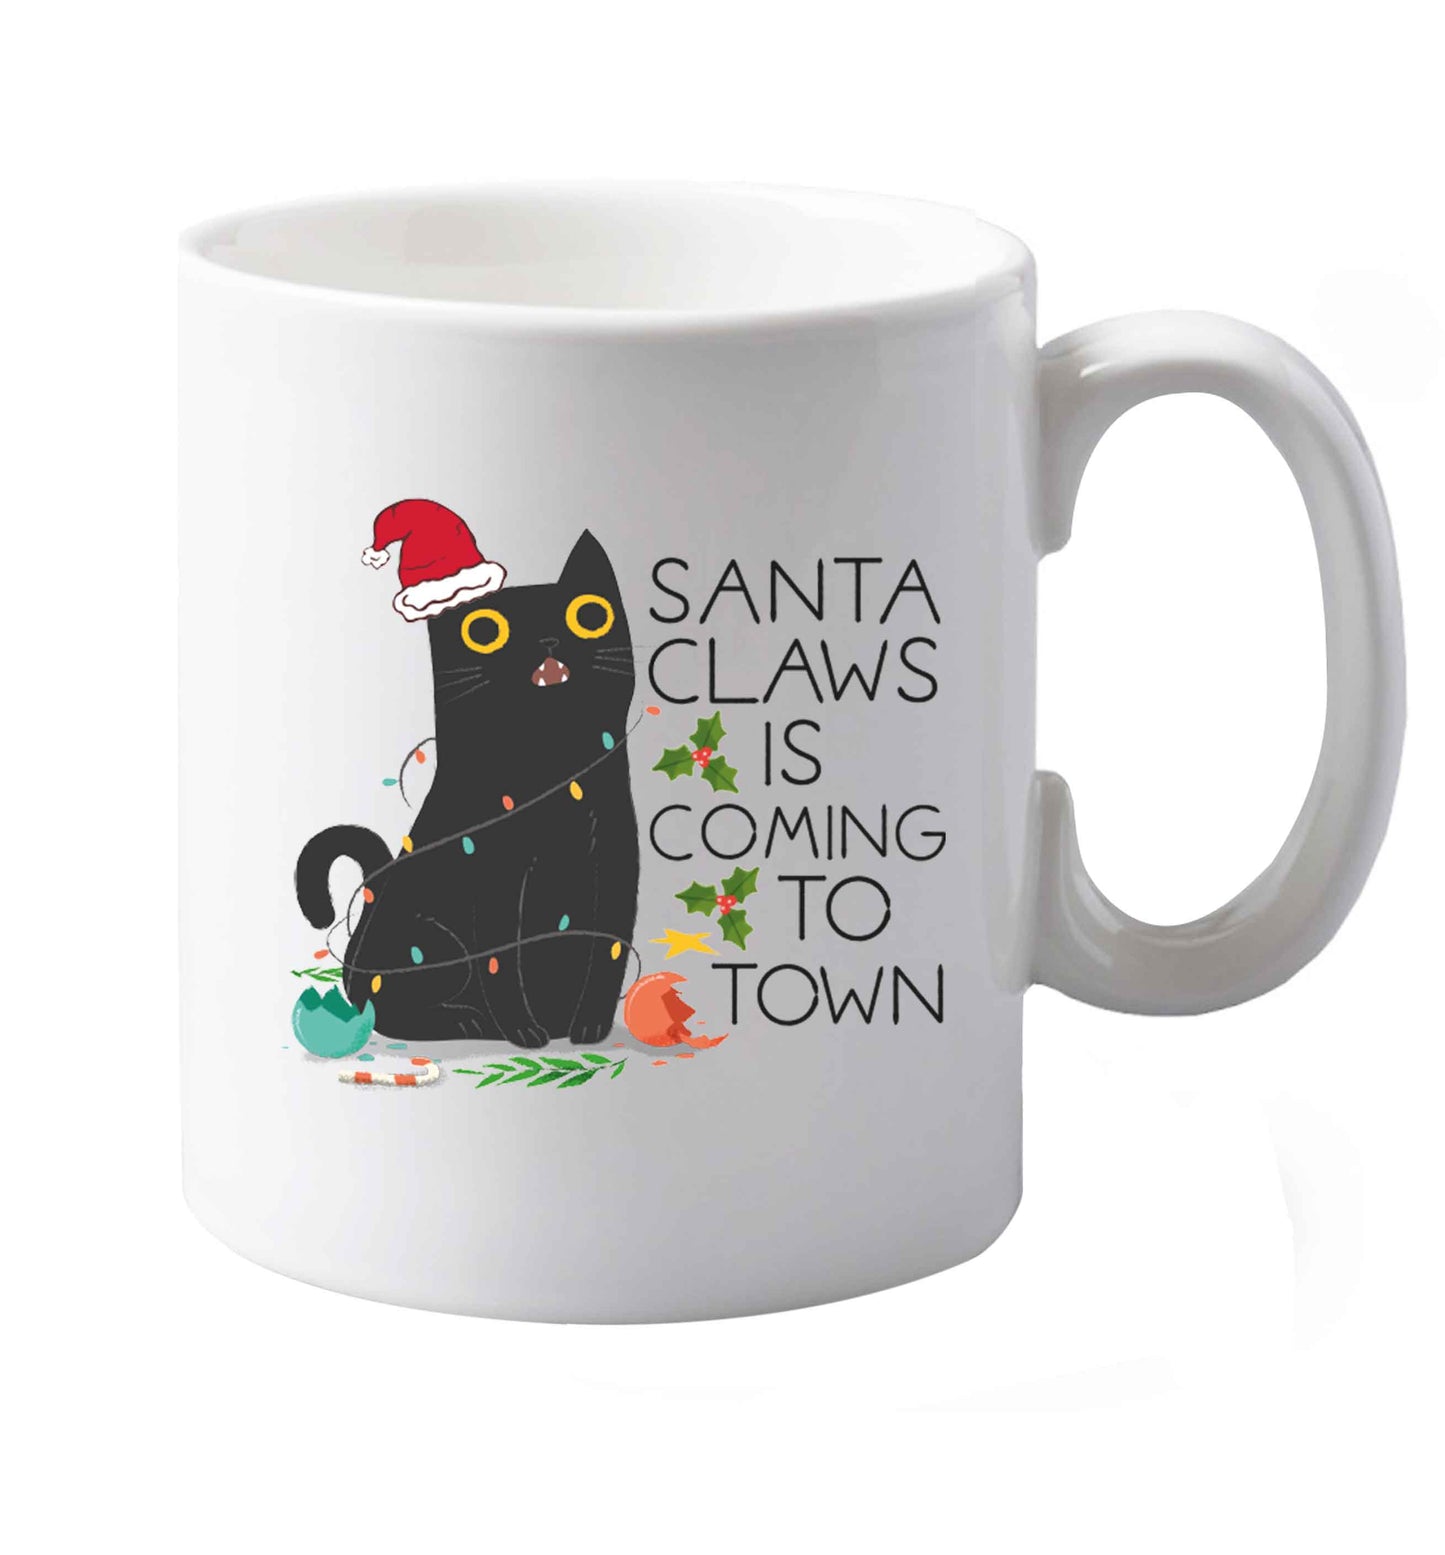 10 oz Santa claws is coming to town  ceramic mug both sides